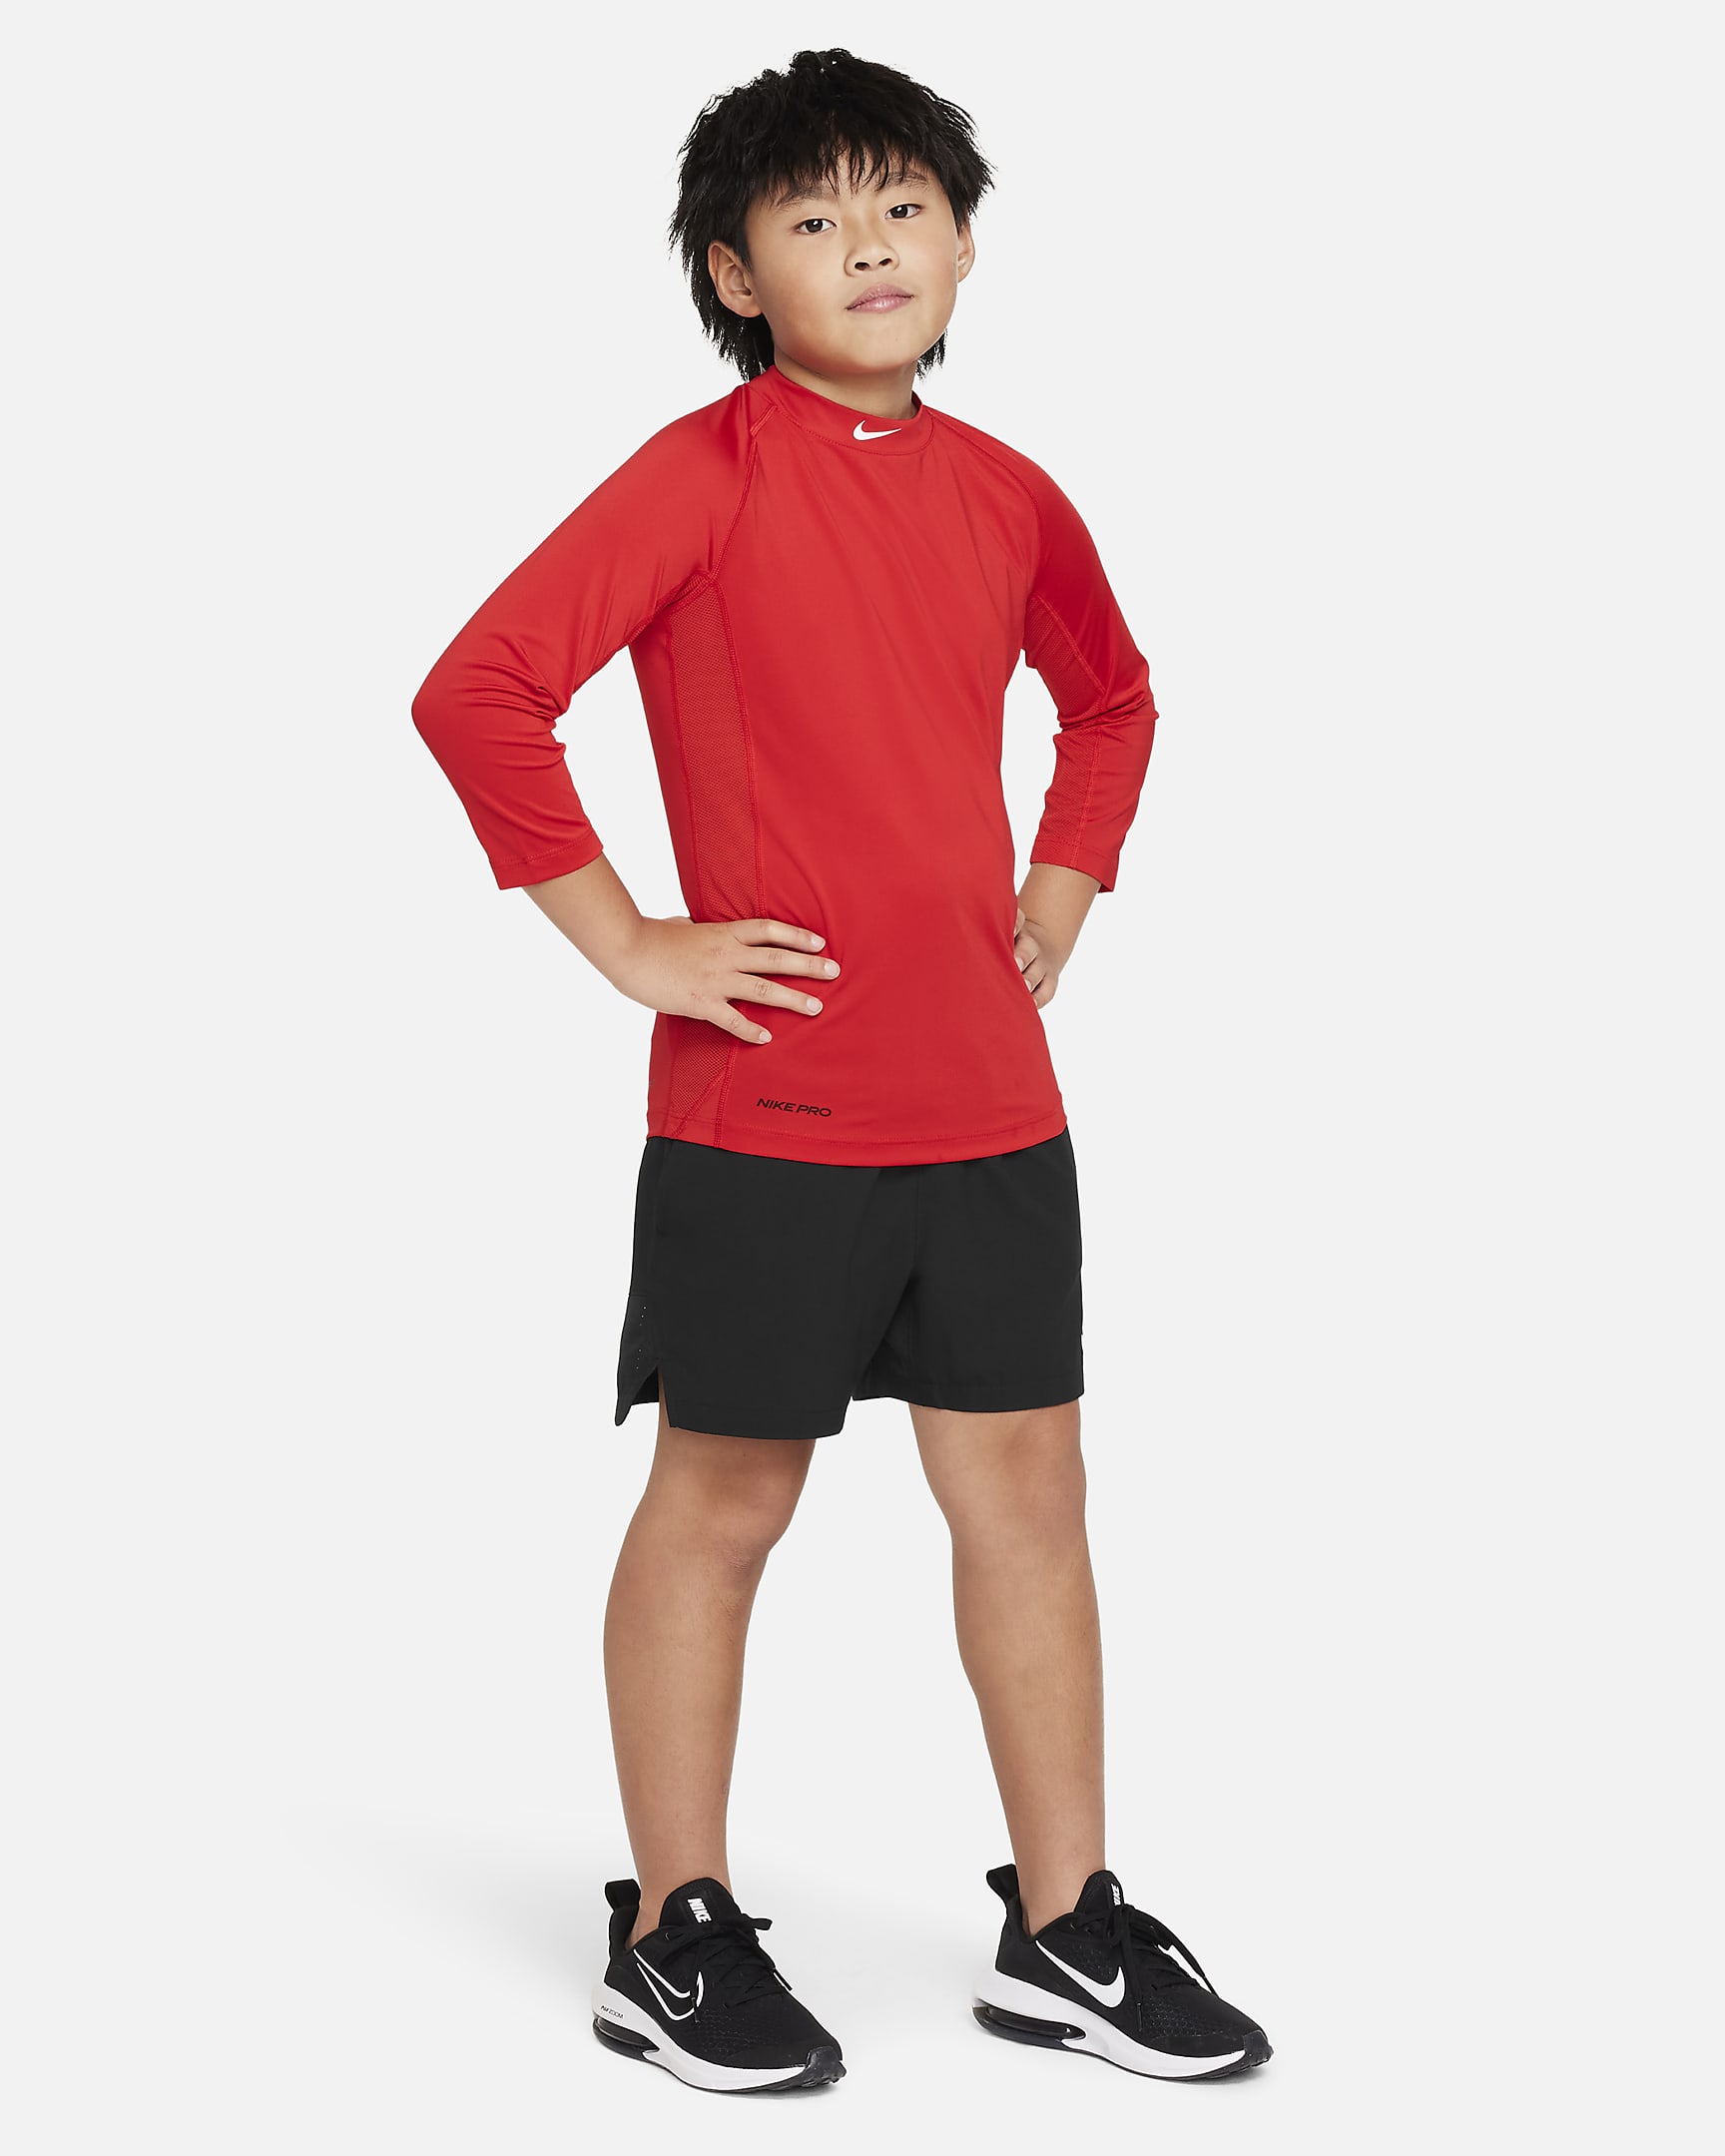 Nike Dry Big Kids' (Boys') 3/4-Sleeve Baseball Top. Nike.com